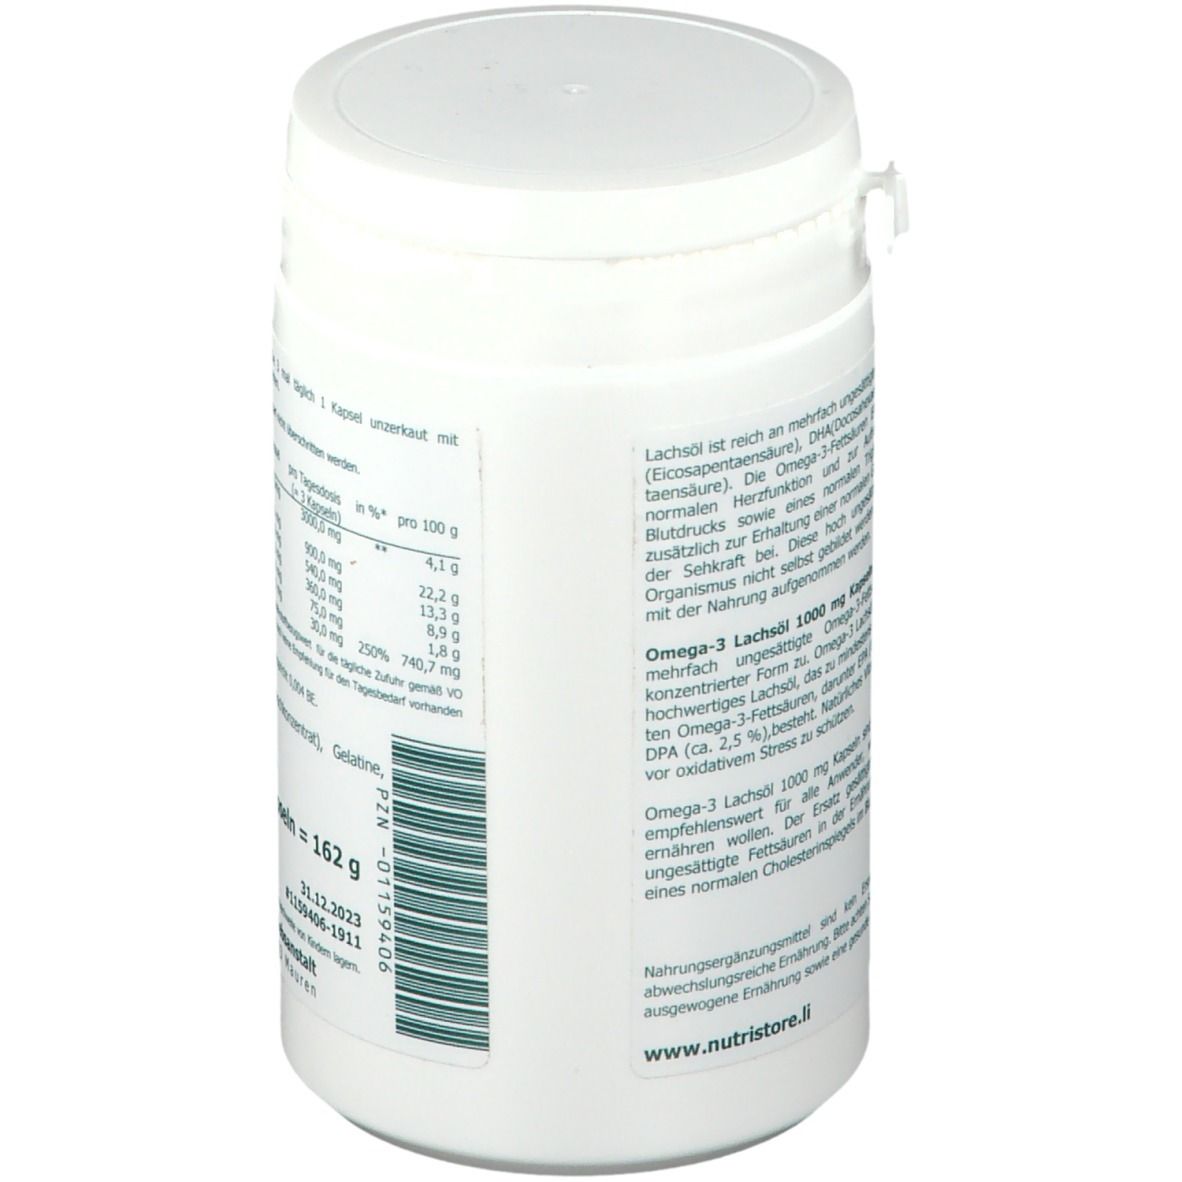 Omega-3 Lachsöl 1000 mg Kapseln